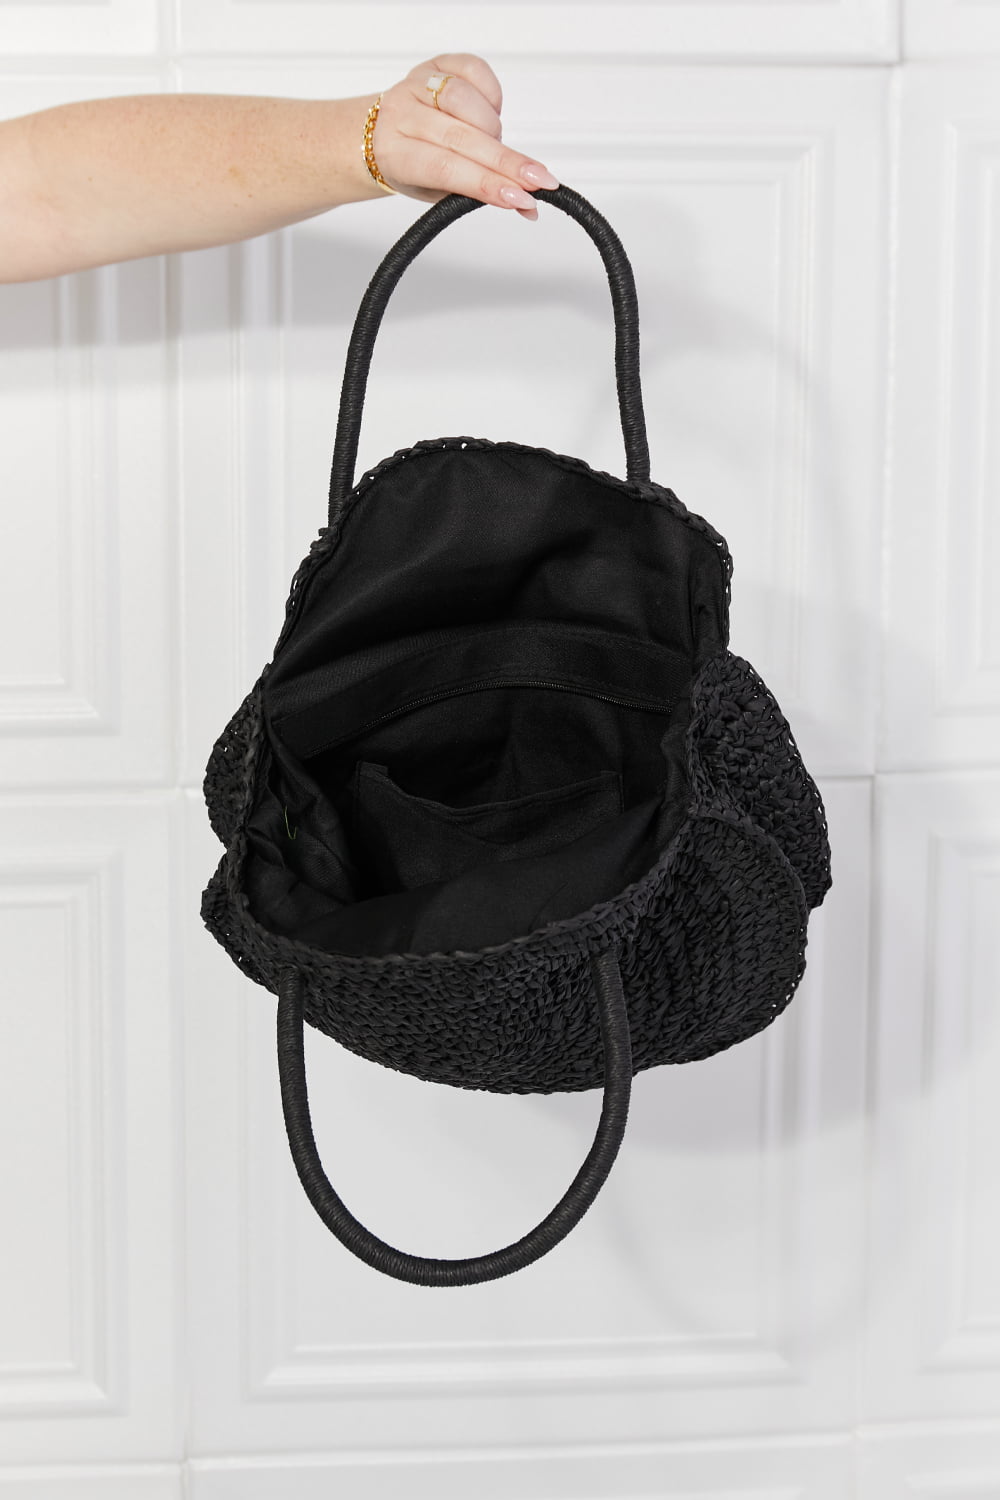 Justin Taylor Beach Date Straw Rattan Handbag in Black - nailedmoms